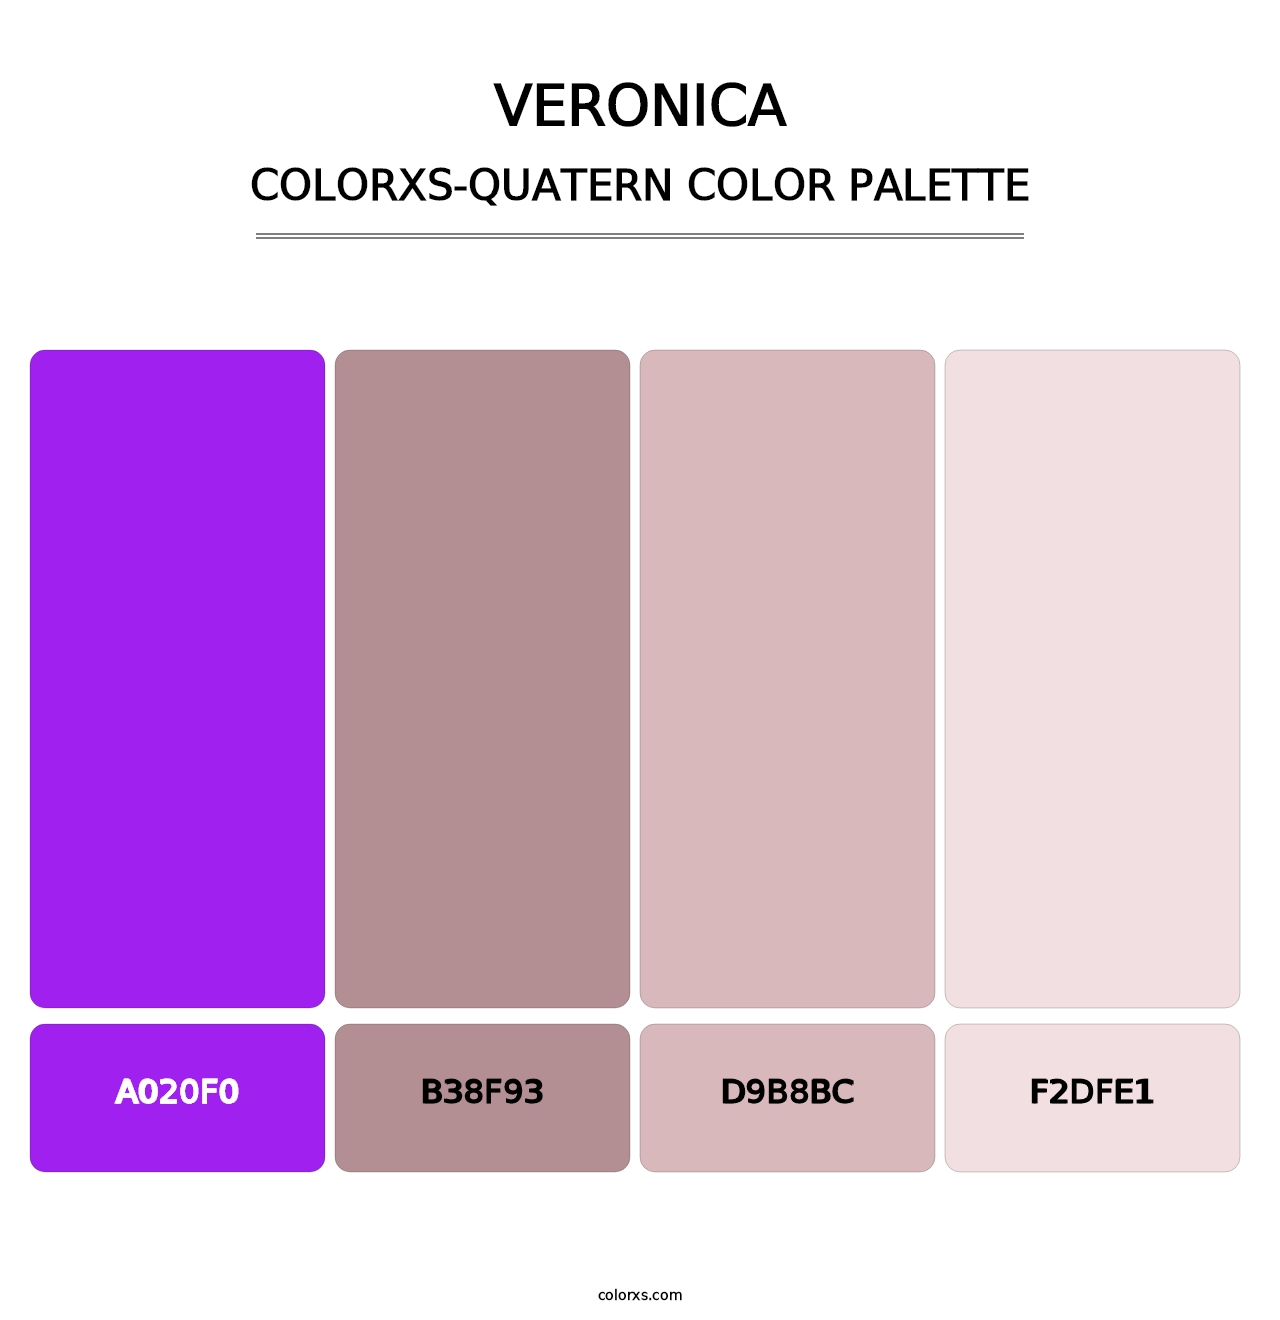 Veronica - Colorxs Quatern Palette